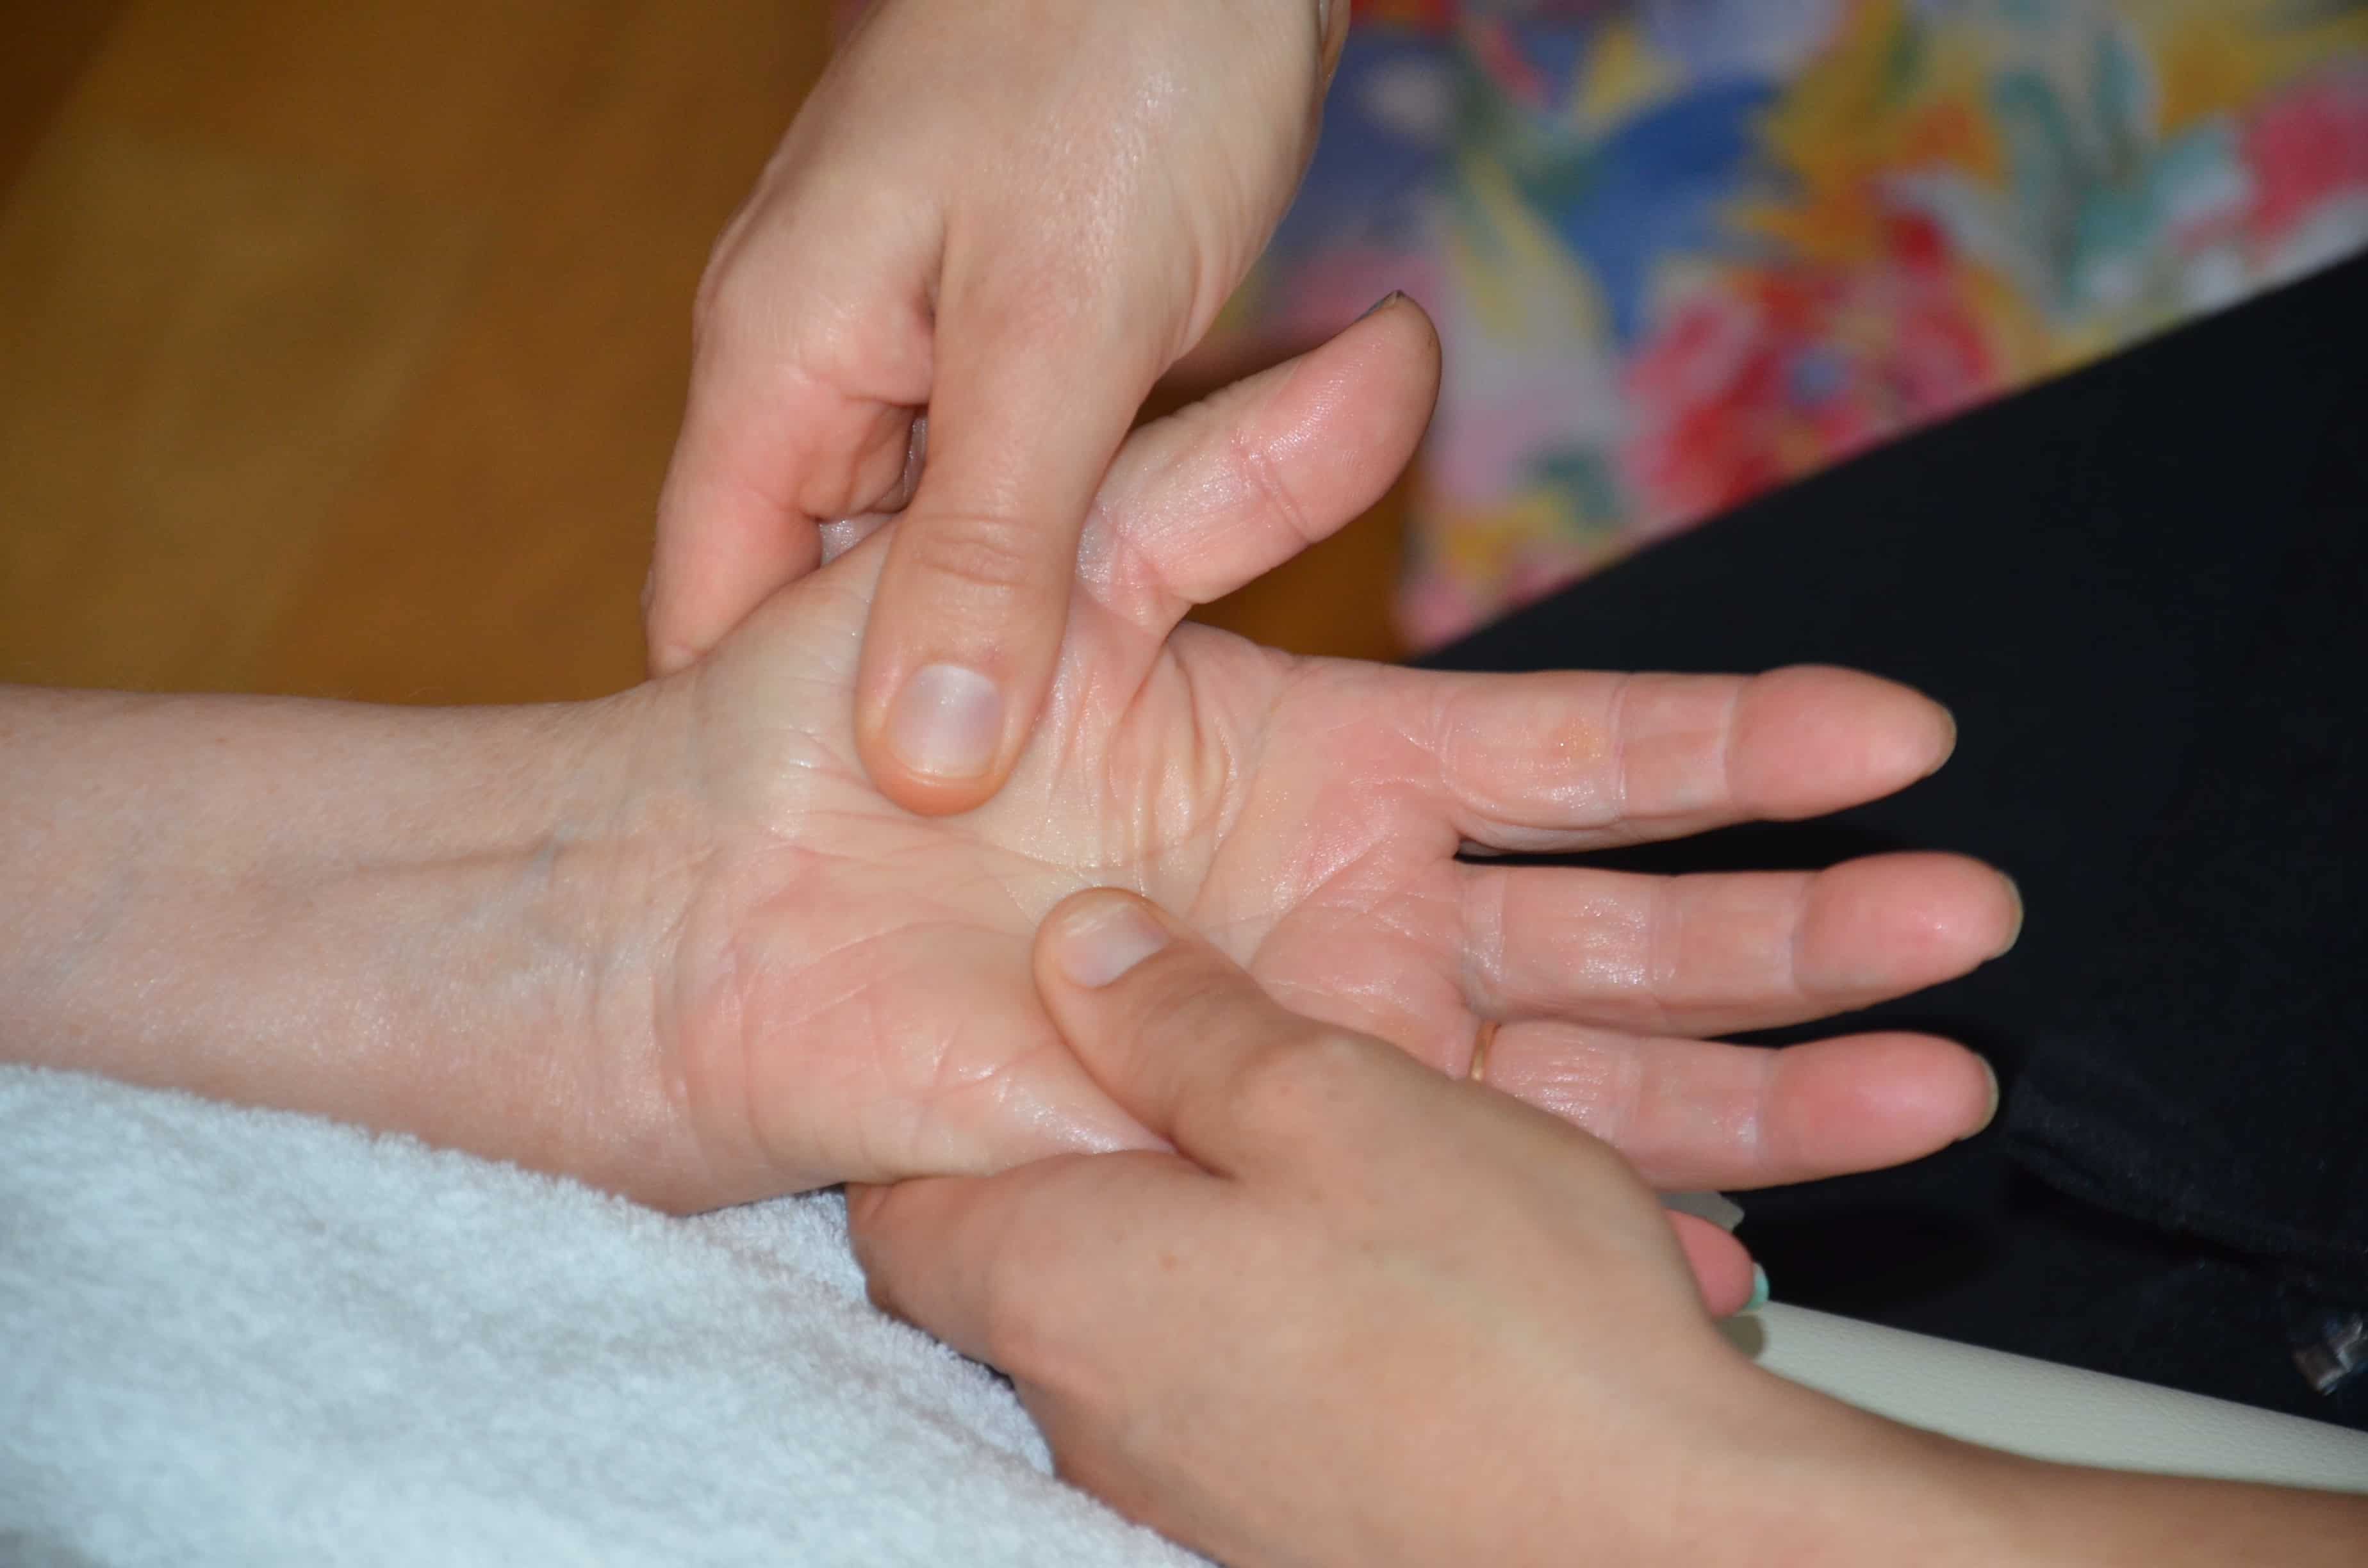 Massage de la main